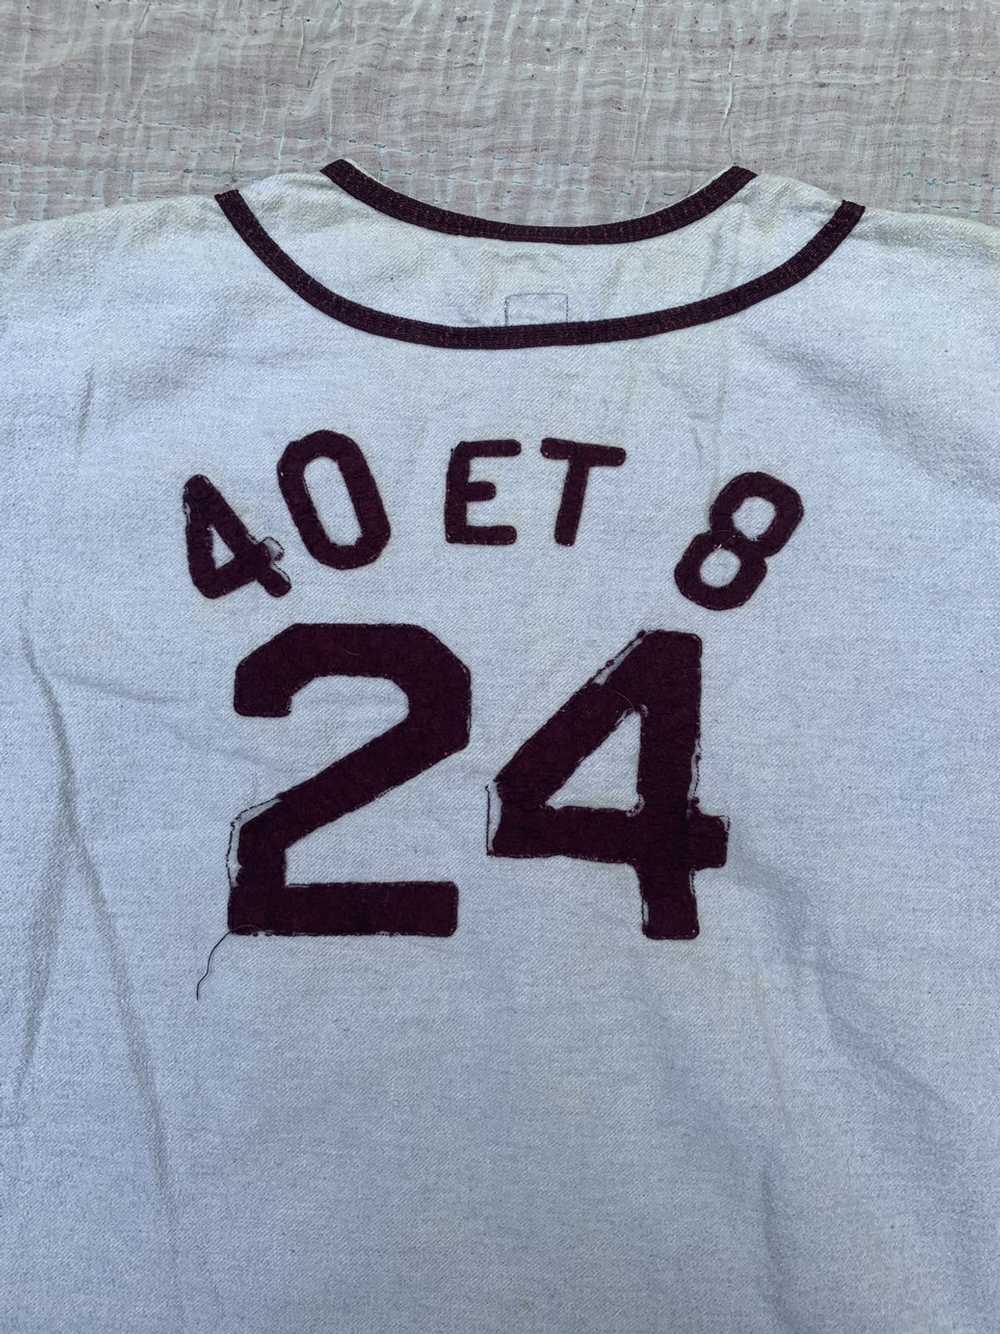 Vintage 1960s Cotton Baseball Jersey - image 4